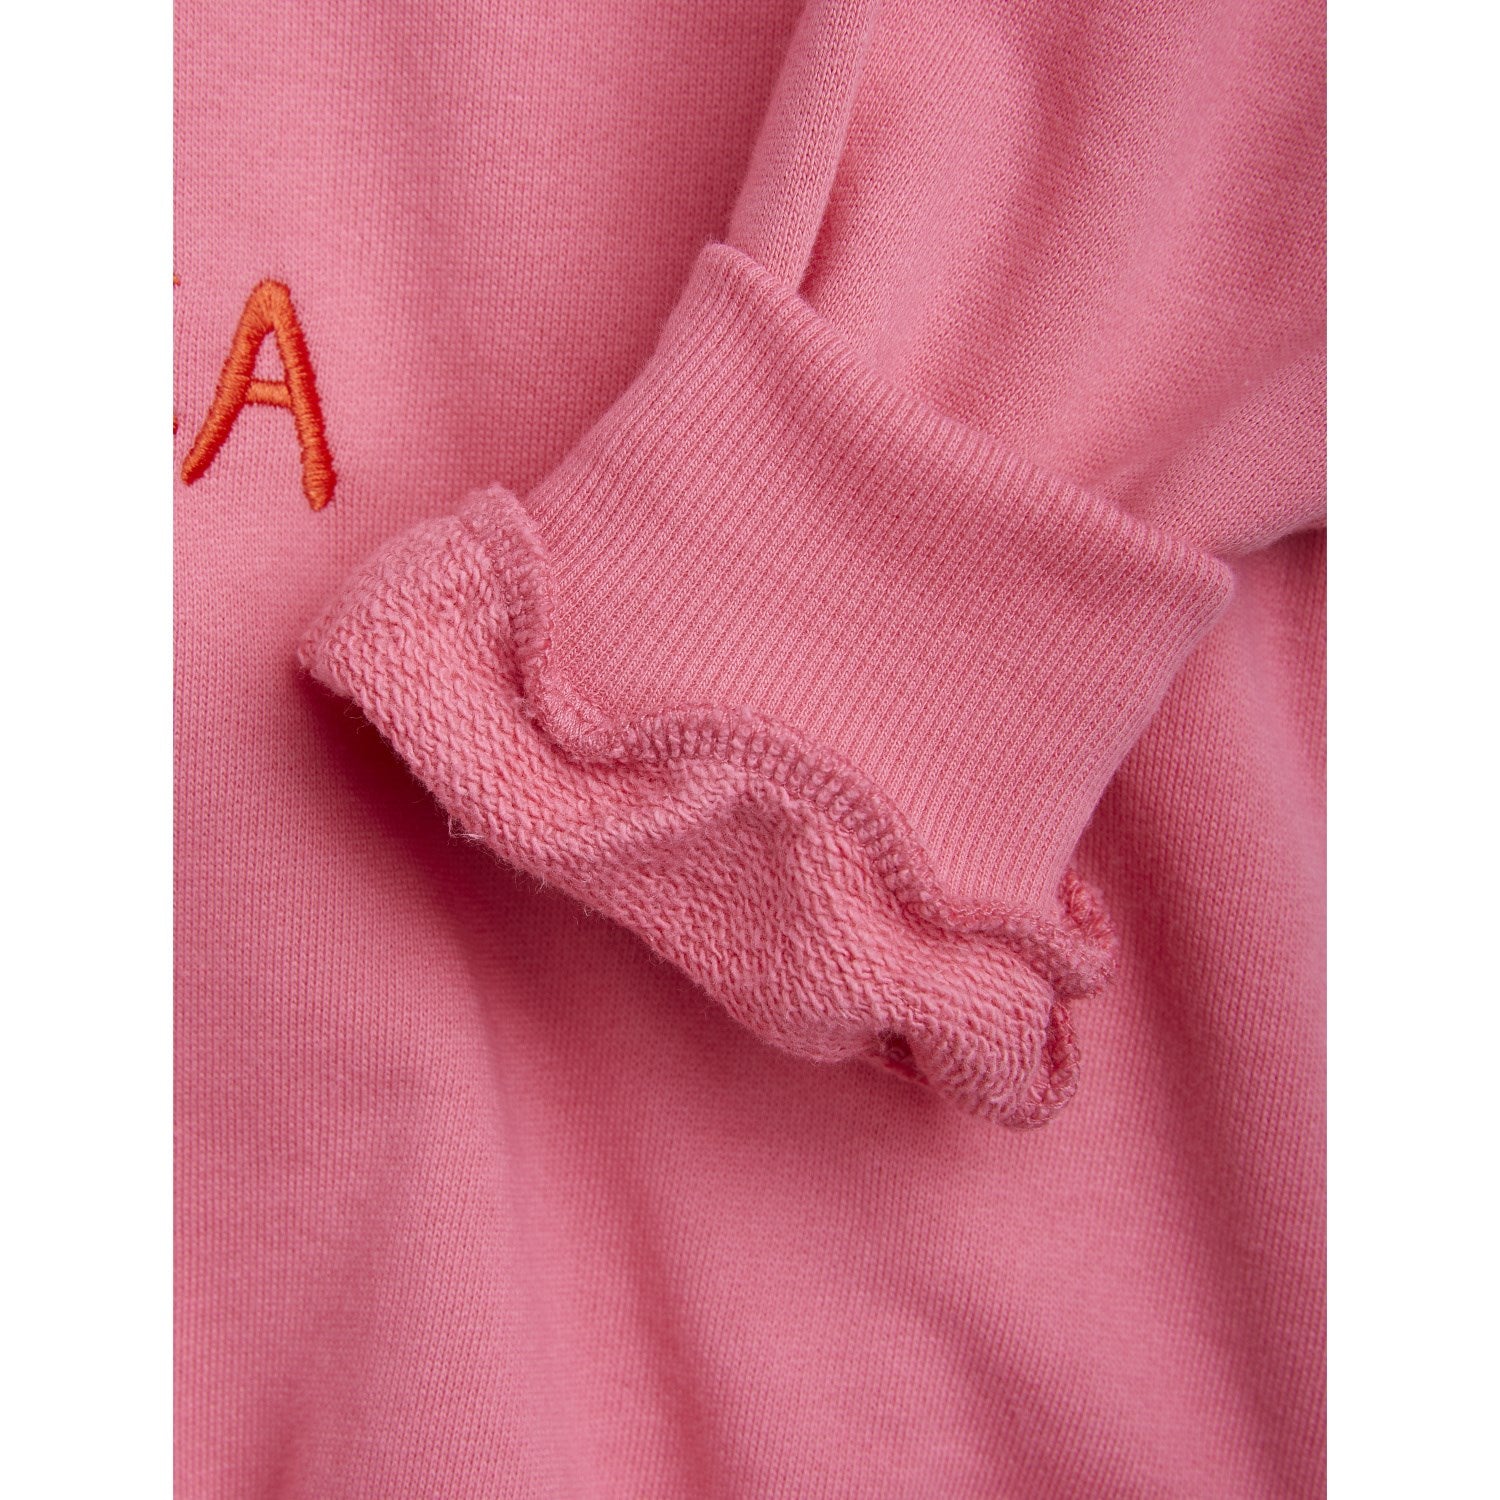 Mini Rodini Pink Parrot Embroidery Sweatshirt 4